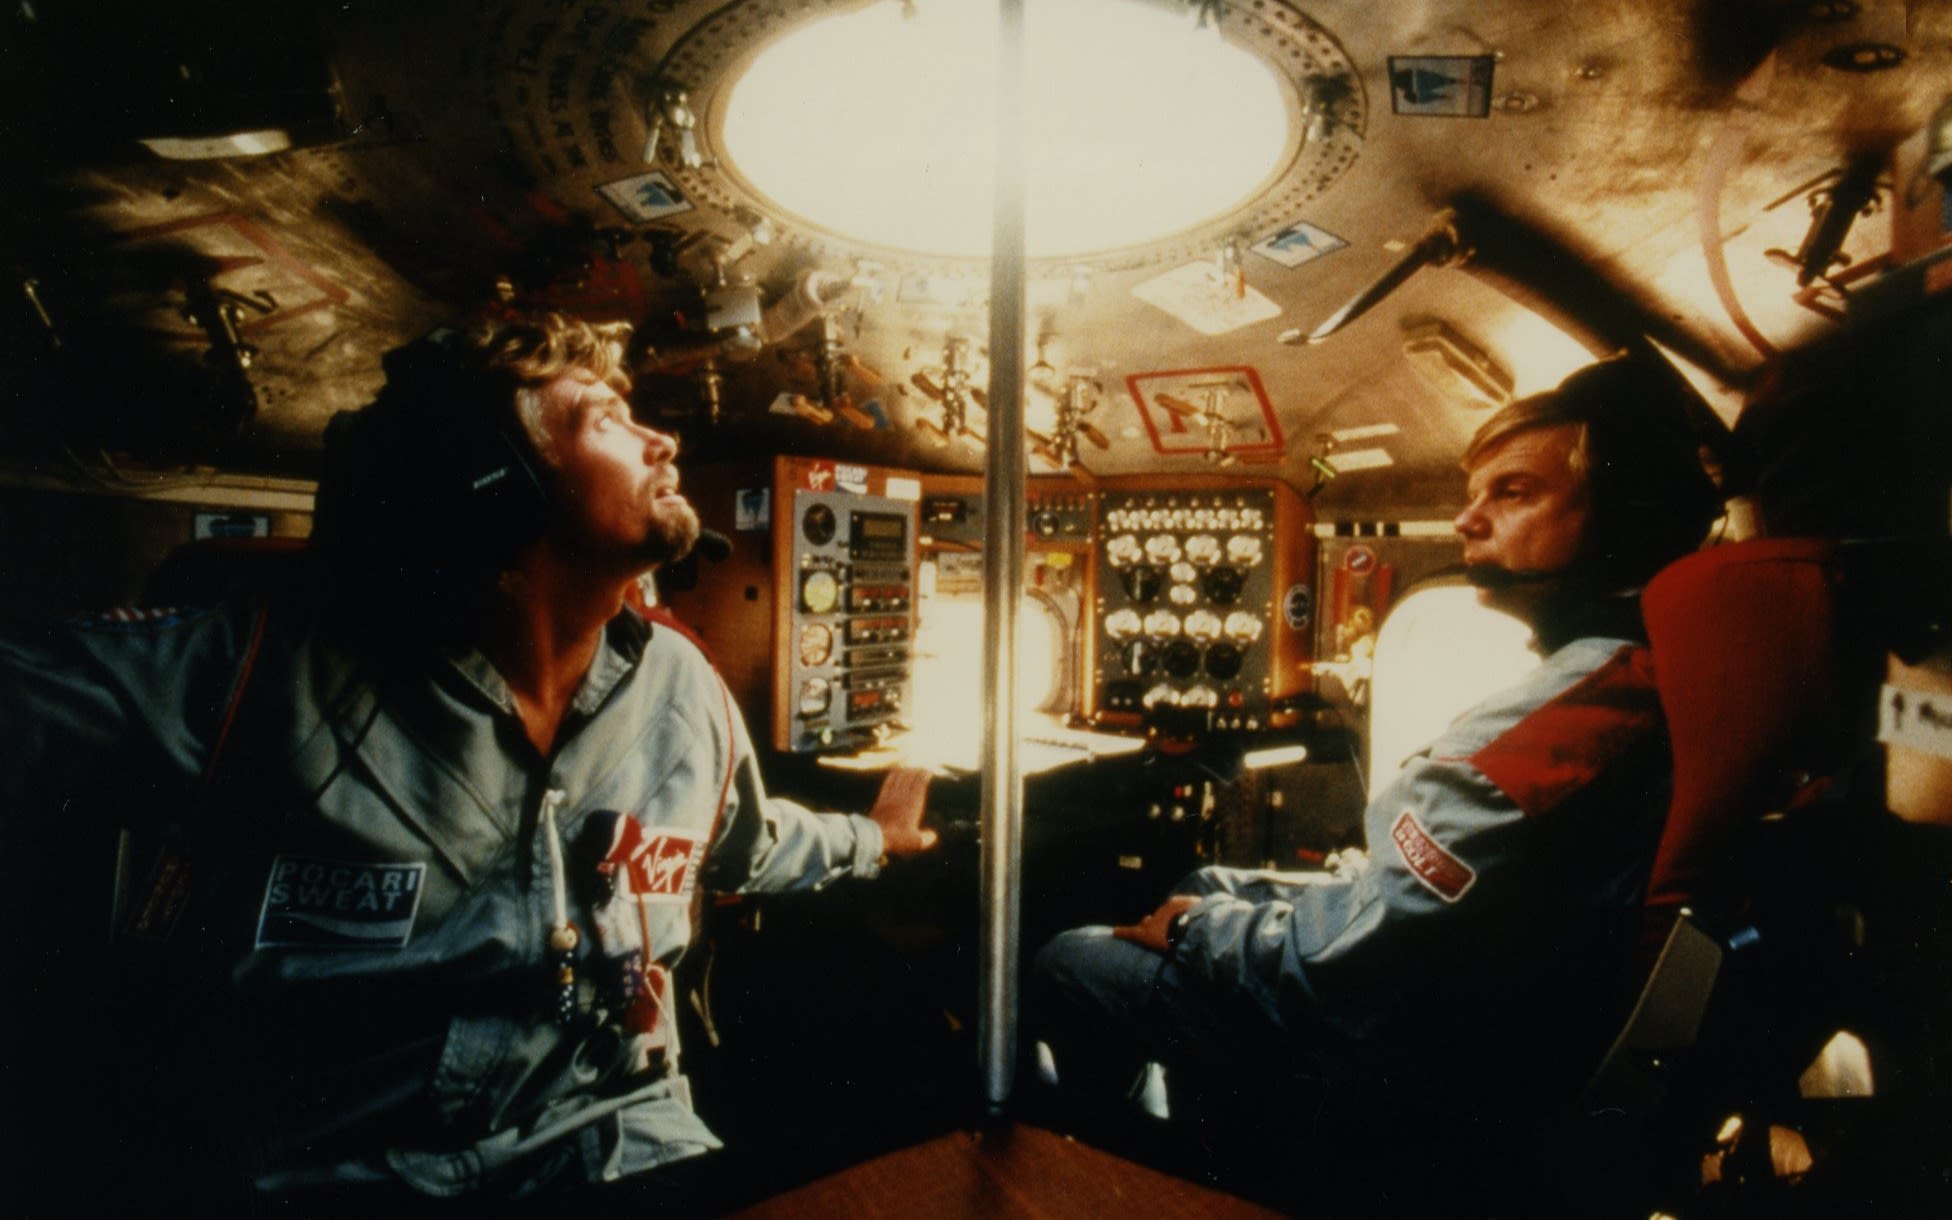 Richard Branson inside a hot-air balloon in 1991